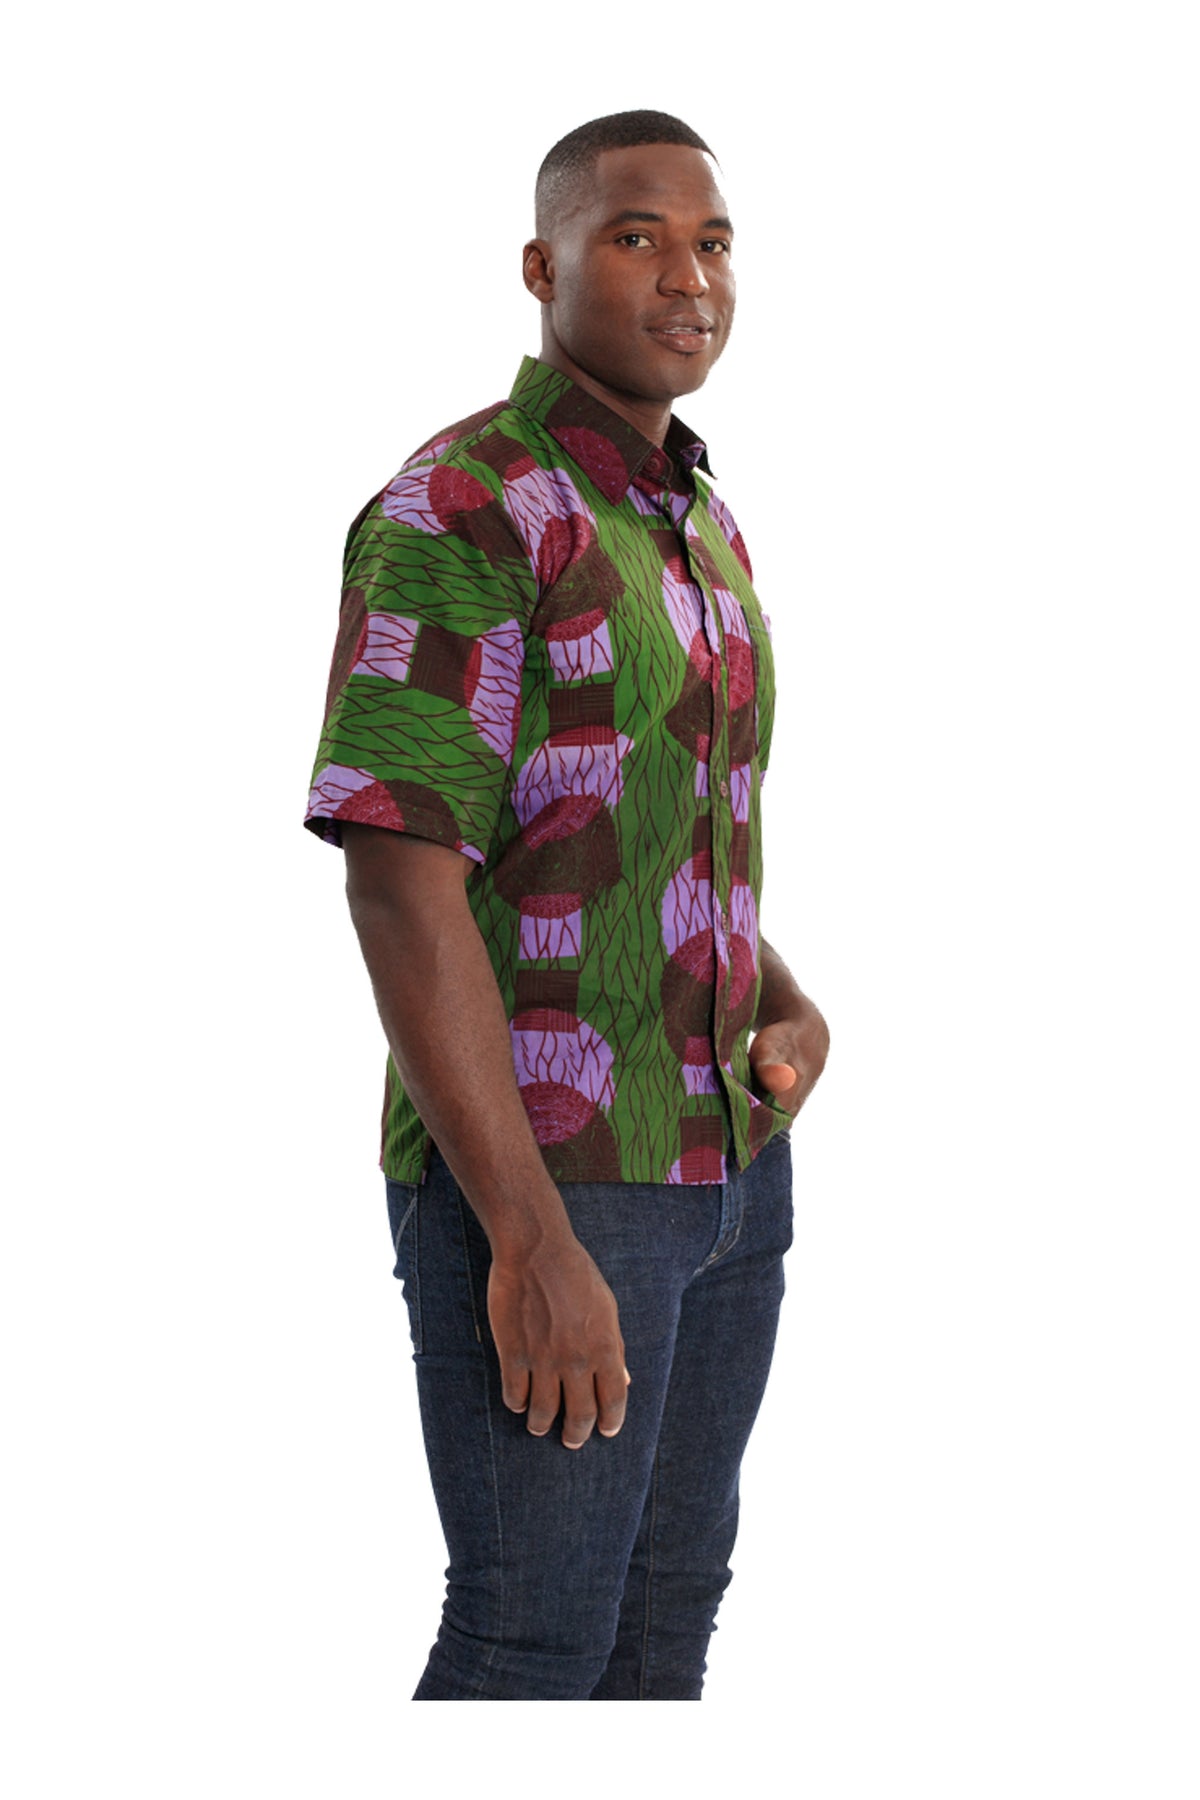 Real Men Wear Color African Print Top